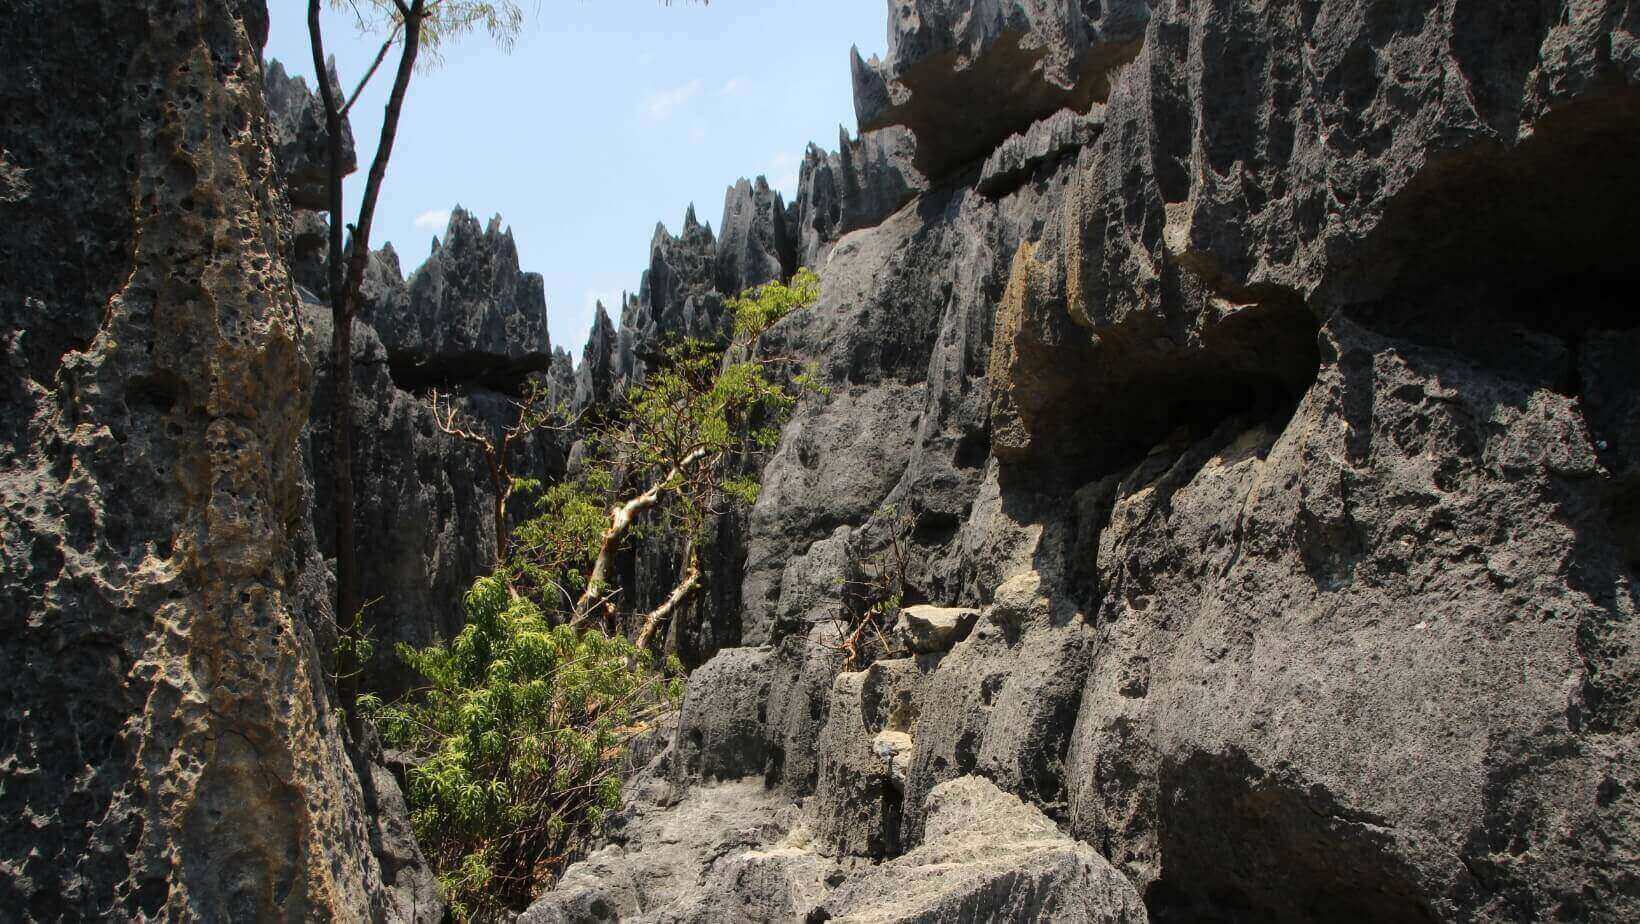 Tsingy de Bemaraha National Park in Madagascar